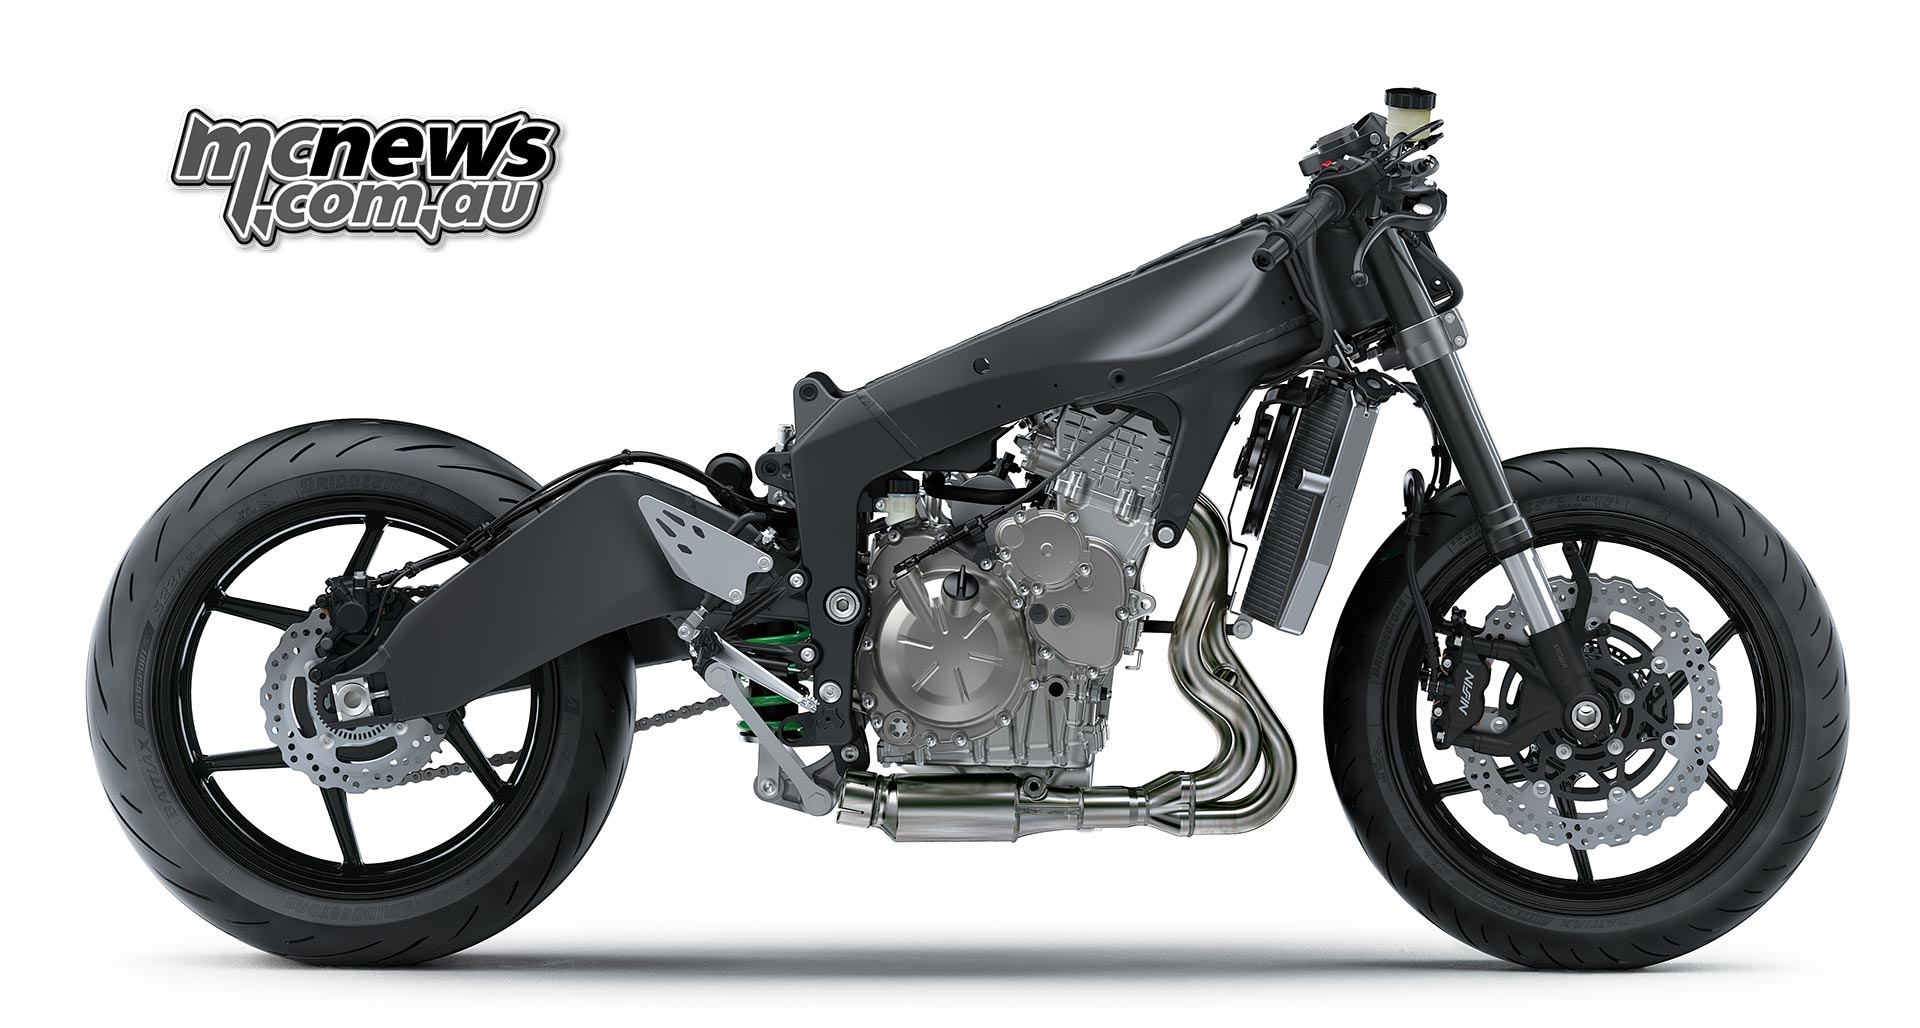 Kawasaki's 636cc ZX-6R gets fresh new look/tech for 2019 MCNews